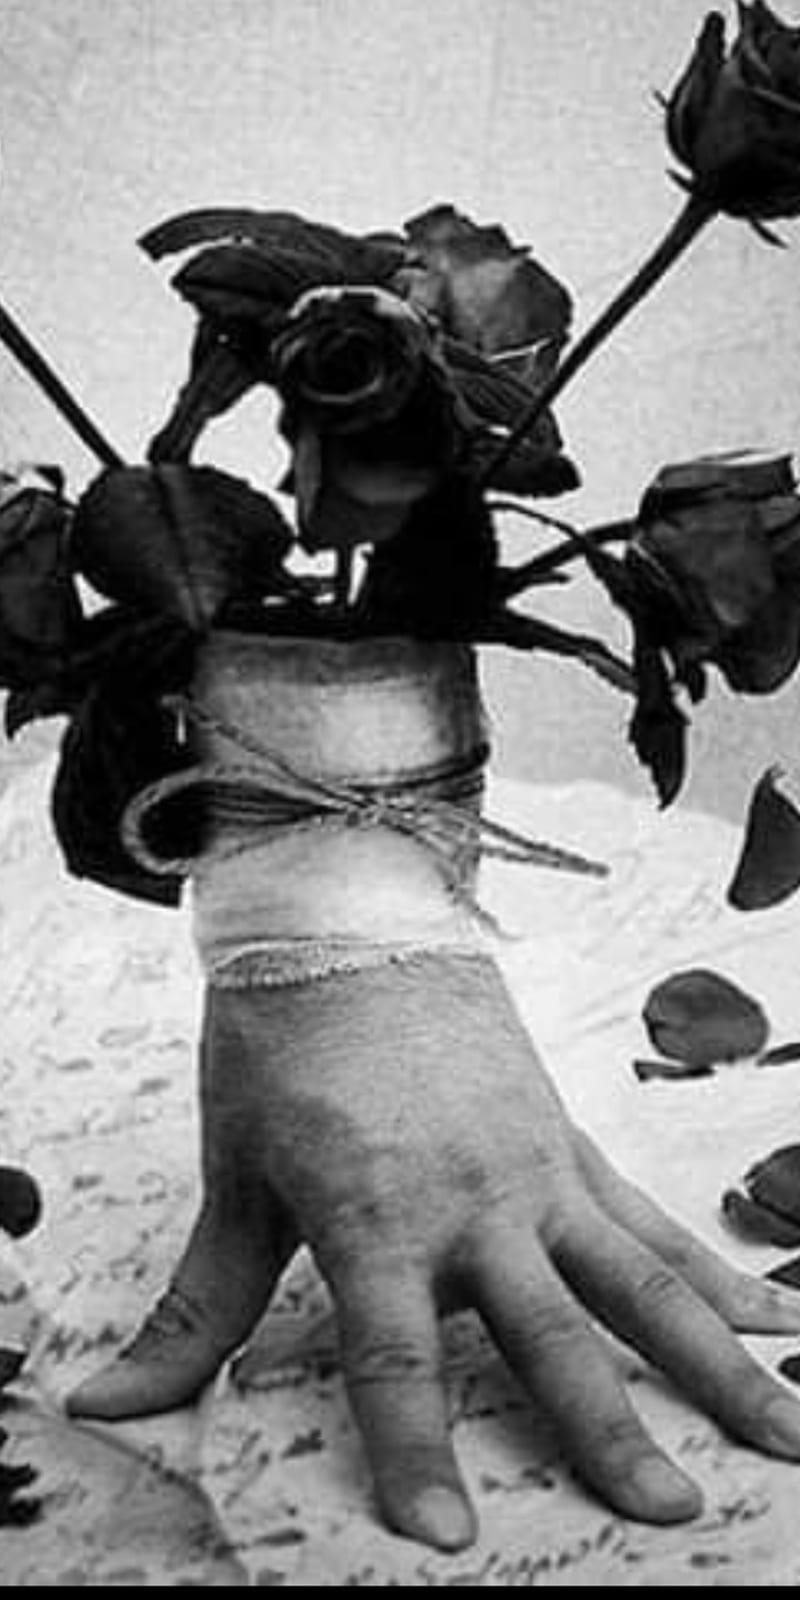 lana del rey black and white rose